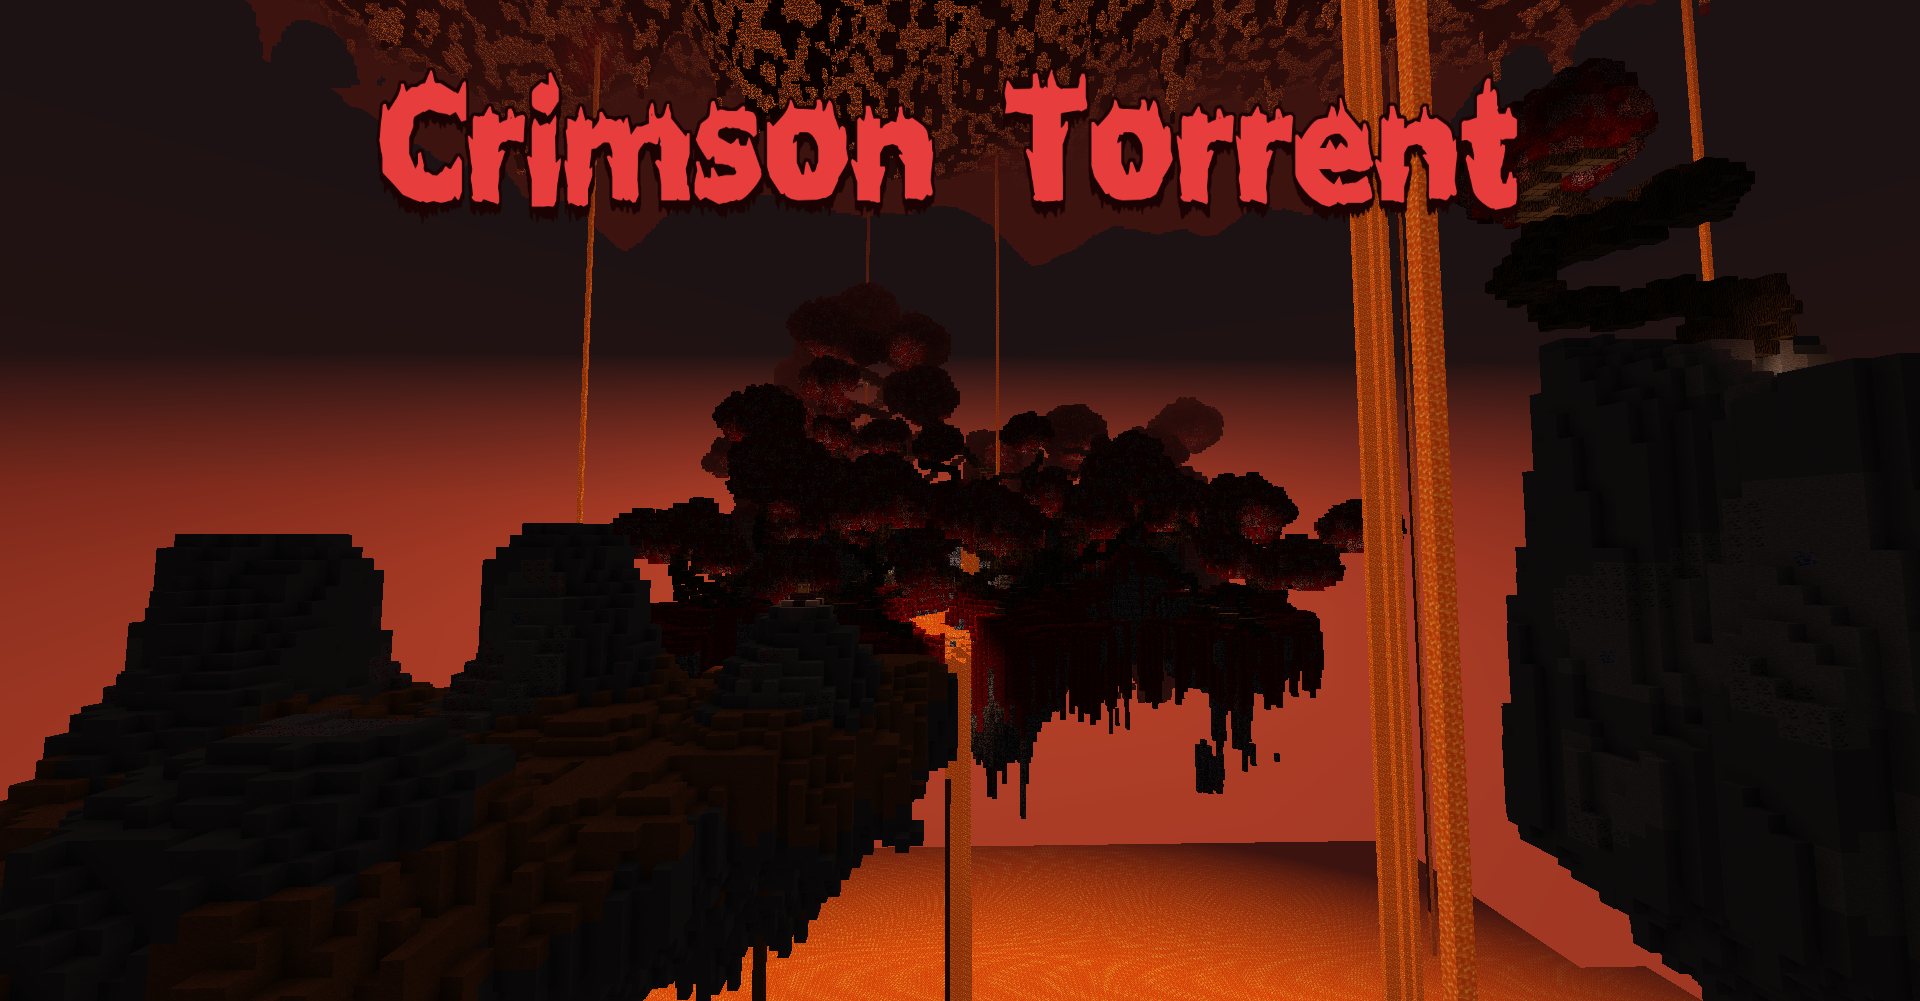 Download Crimson Torrent 25 Mb Map For Minecraft